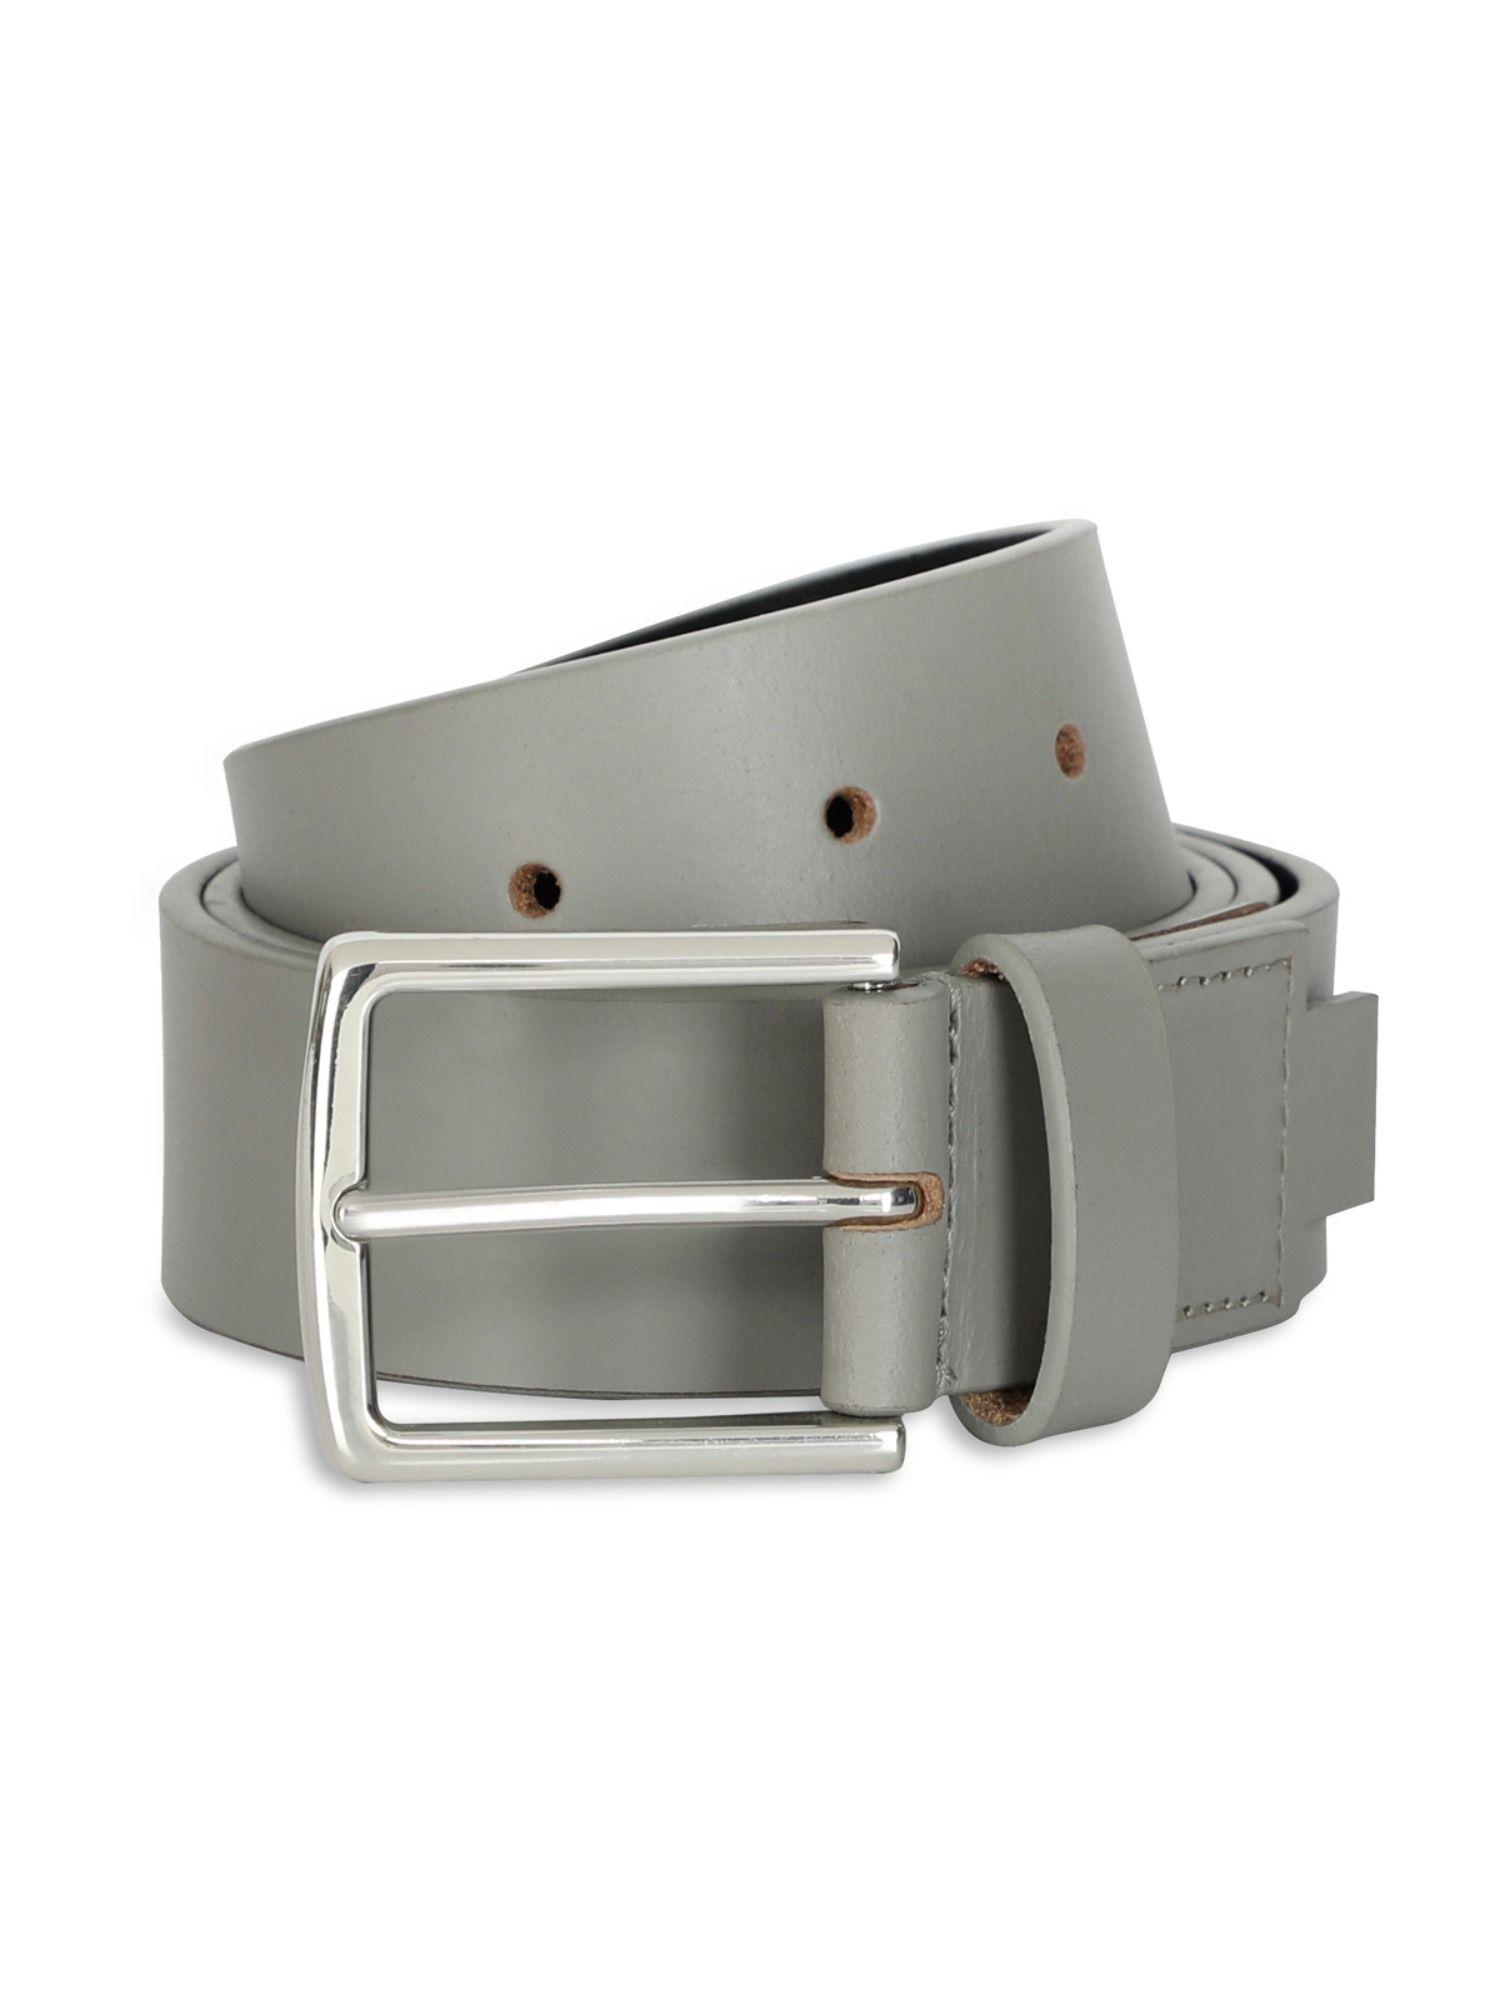 bianka mens leather belt solid grey s 8903496180114